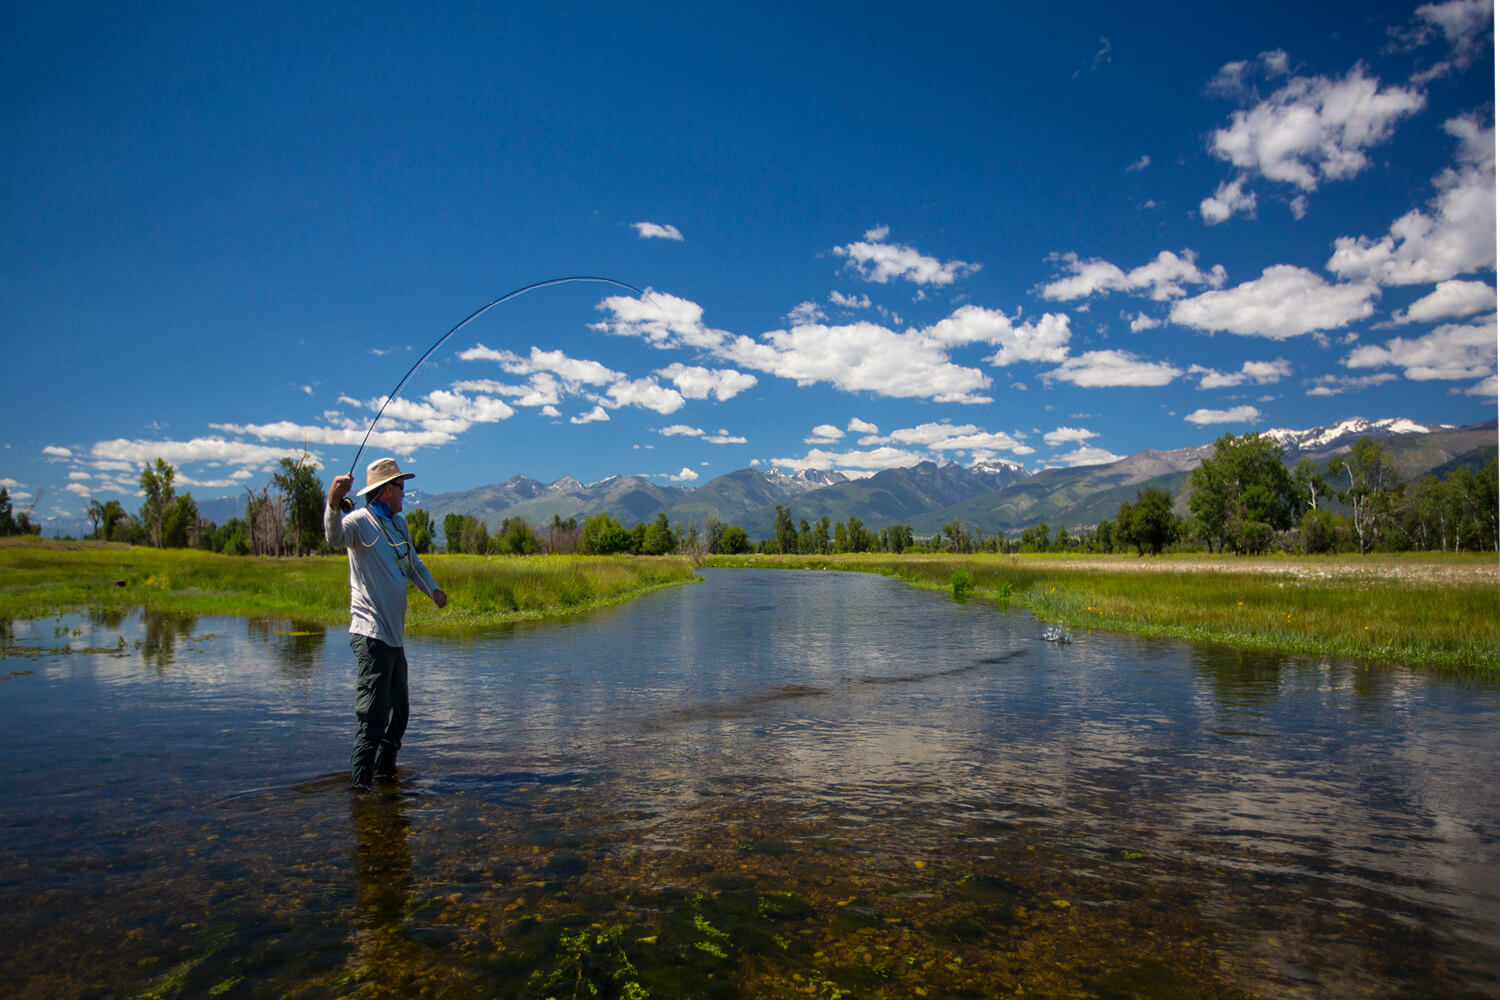 Man fly fishing in Montana river.